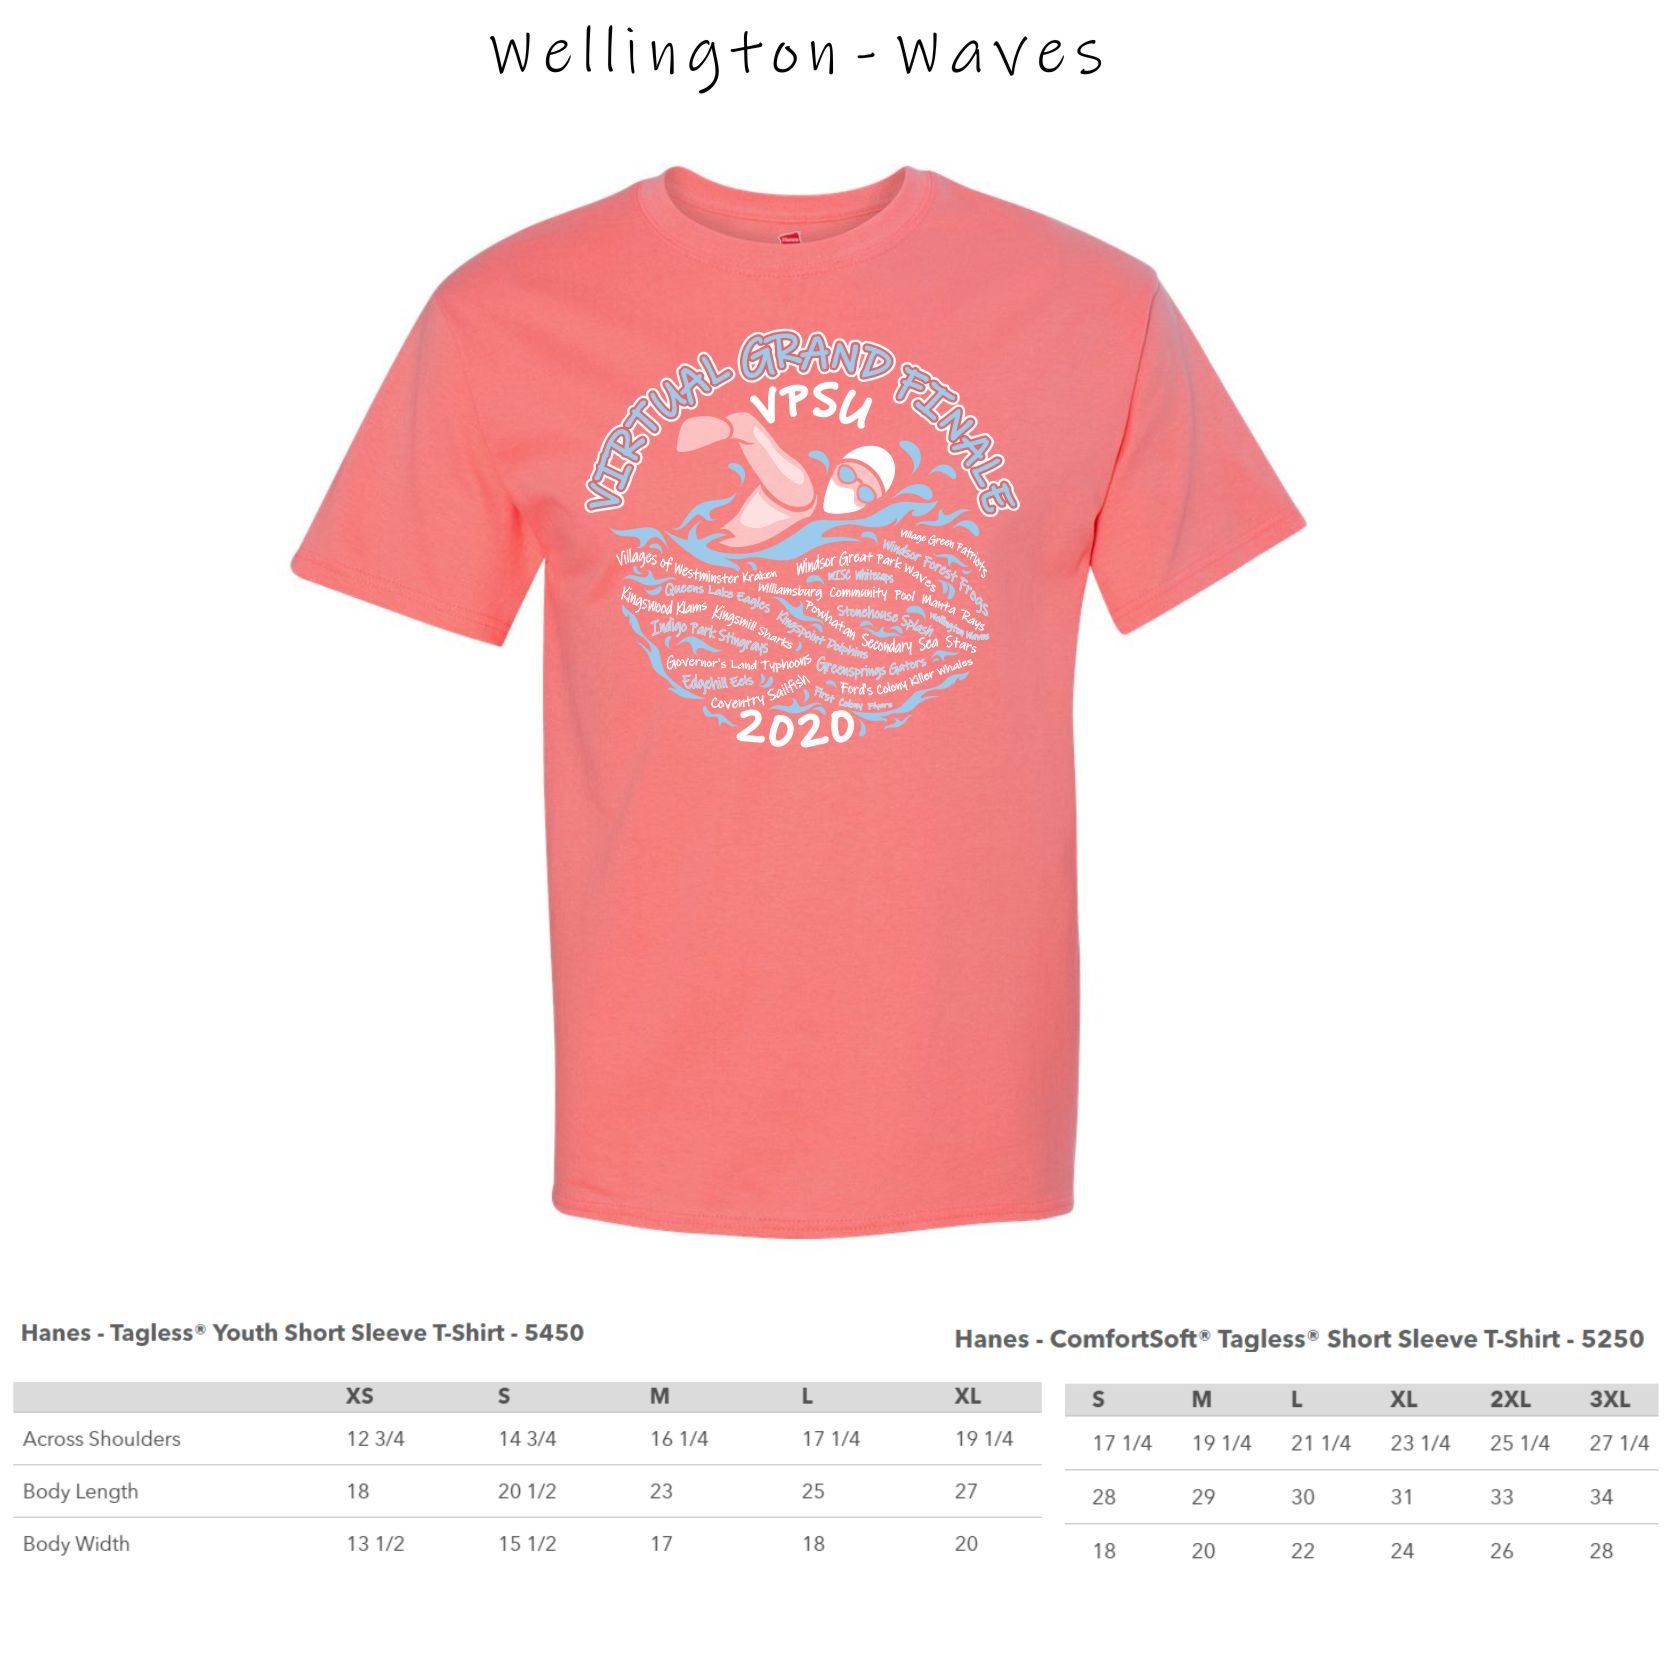 1 - Wellington Waves